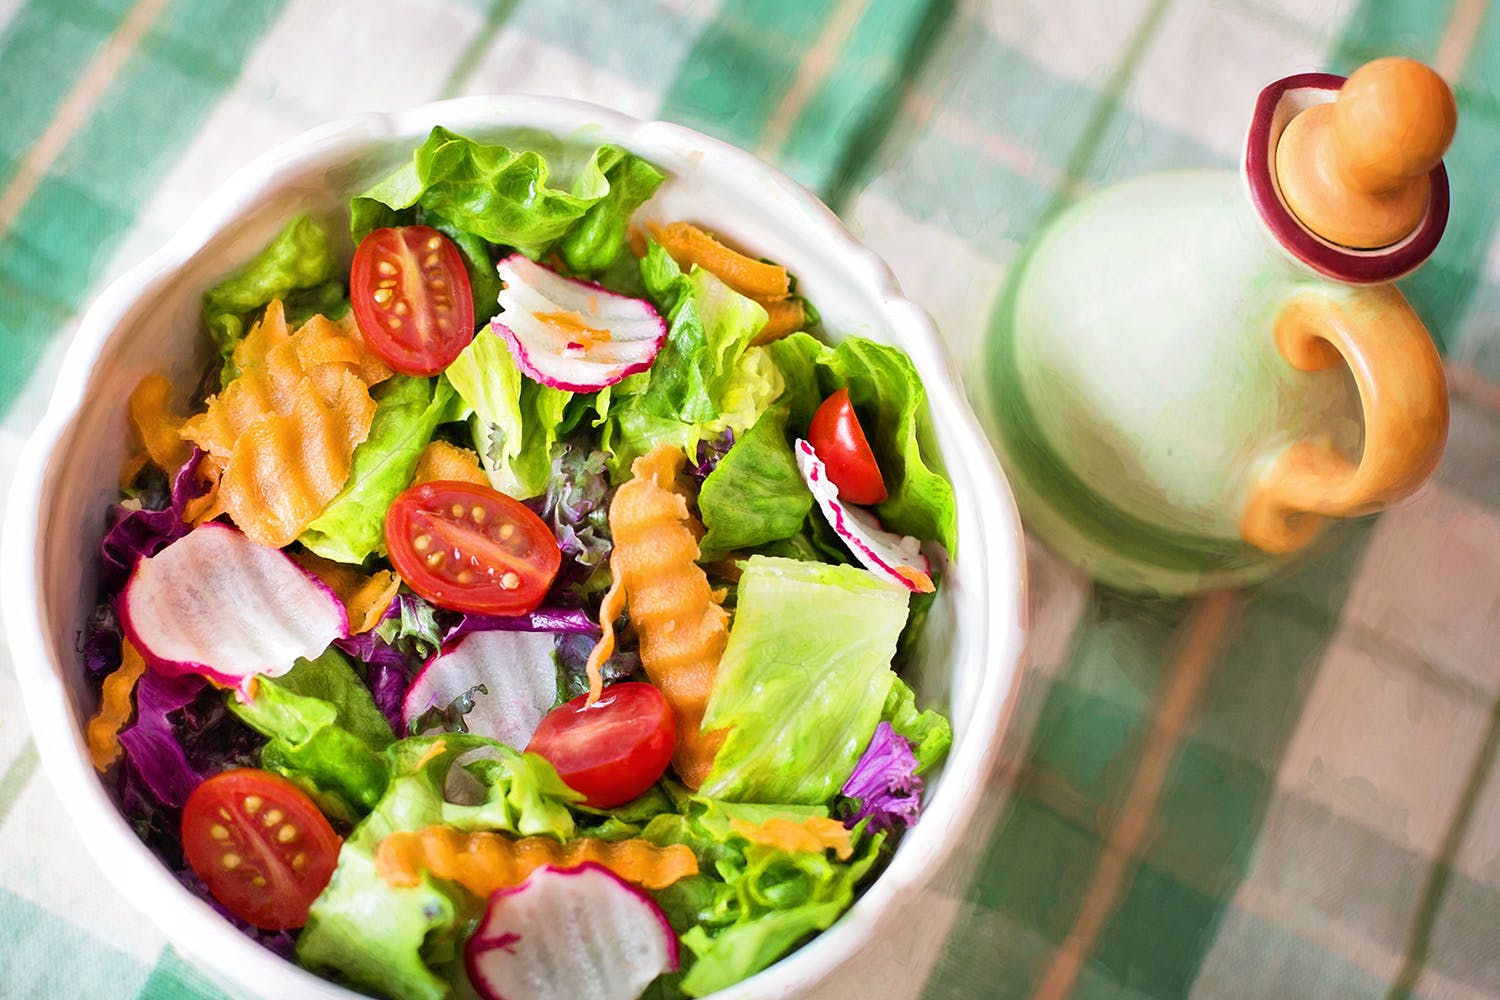 Dish,Food,Garden salad,Salad,Cuisine,Ingredient,Vegetable,Vegetarian food,Produce,Spinach salad